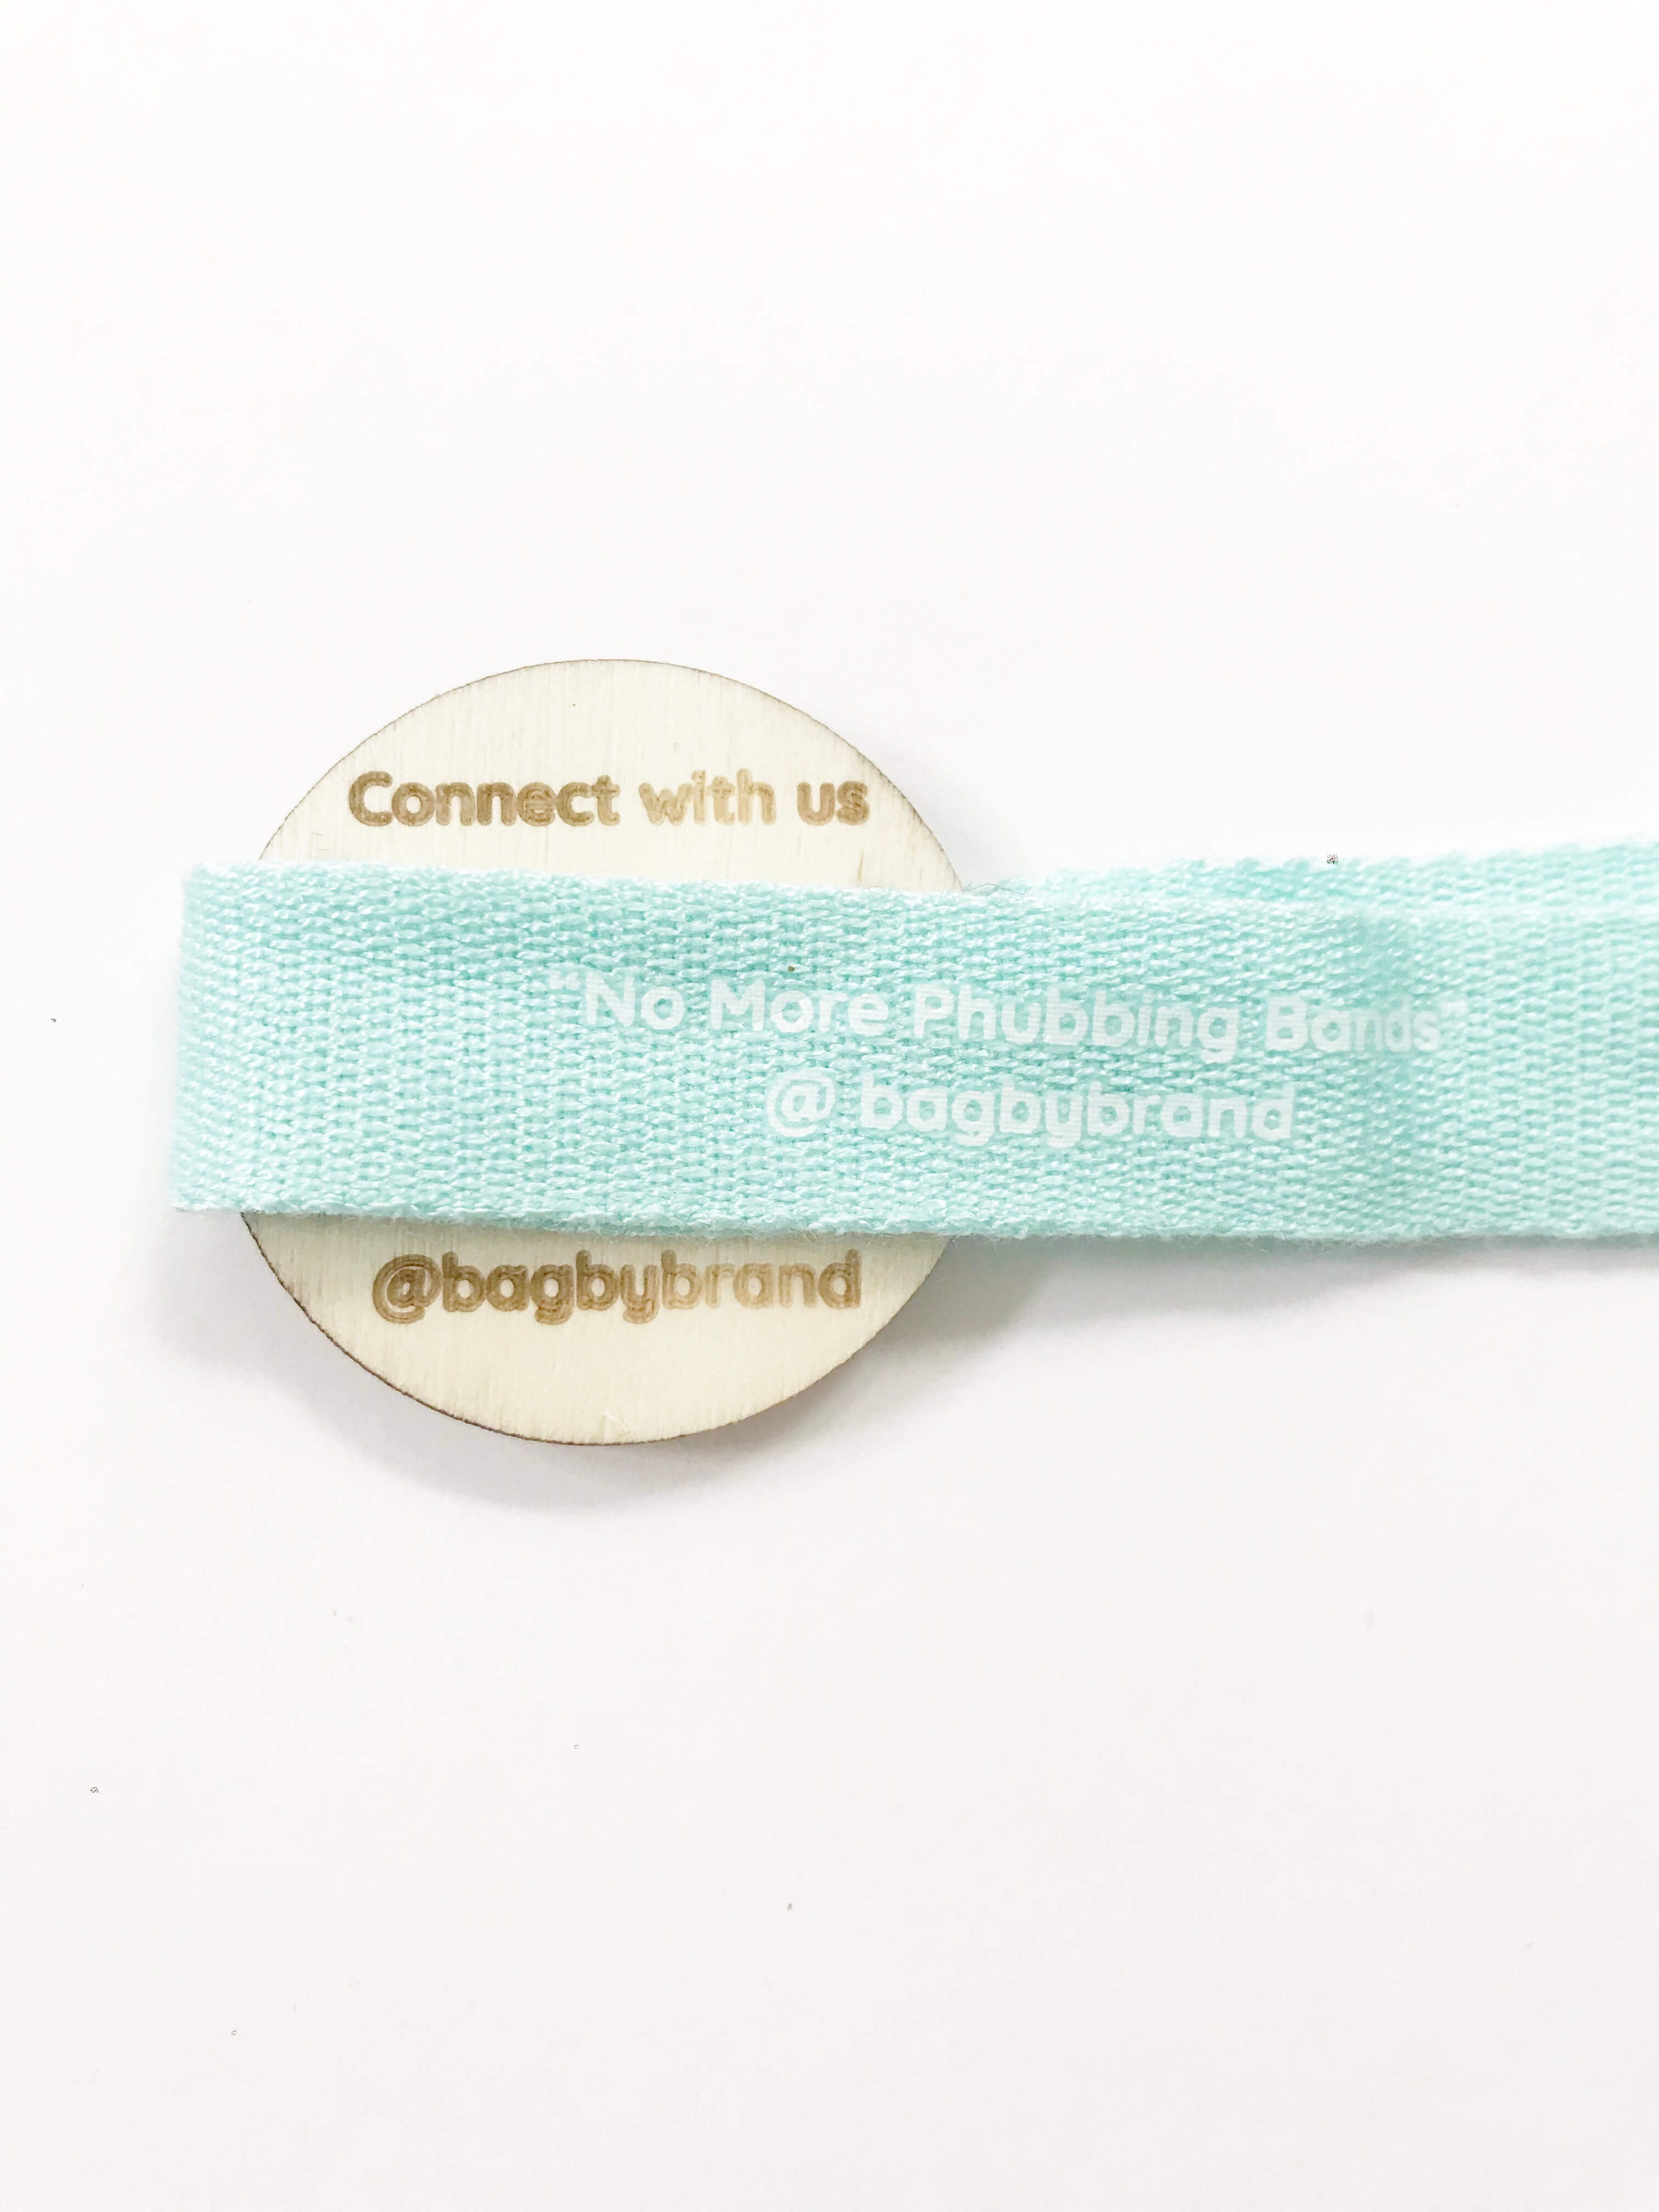 Bagby "No More Phubbing Bands" - Biodegradable (Set of 2)